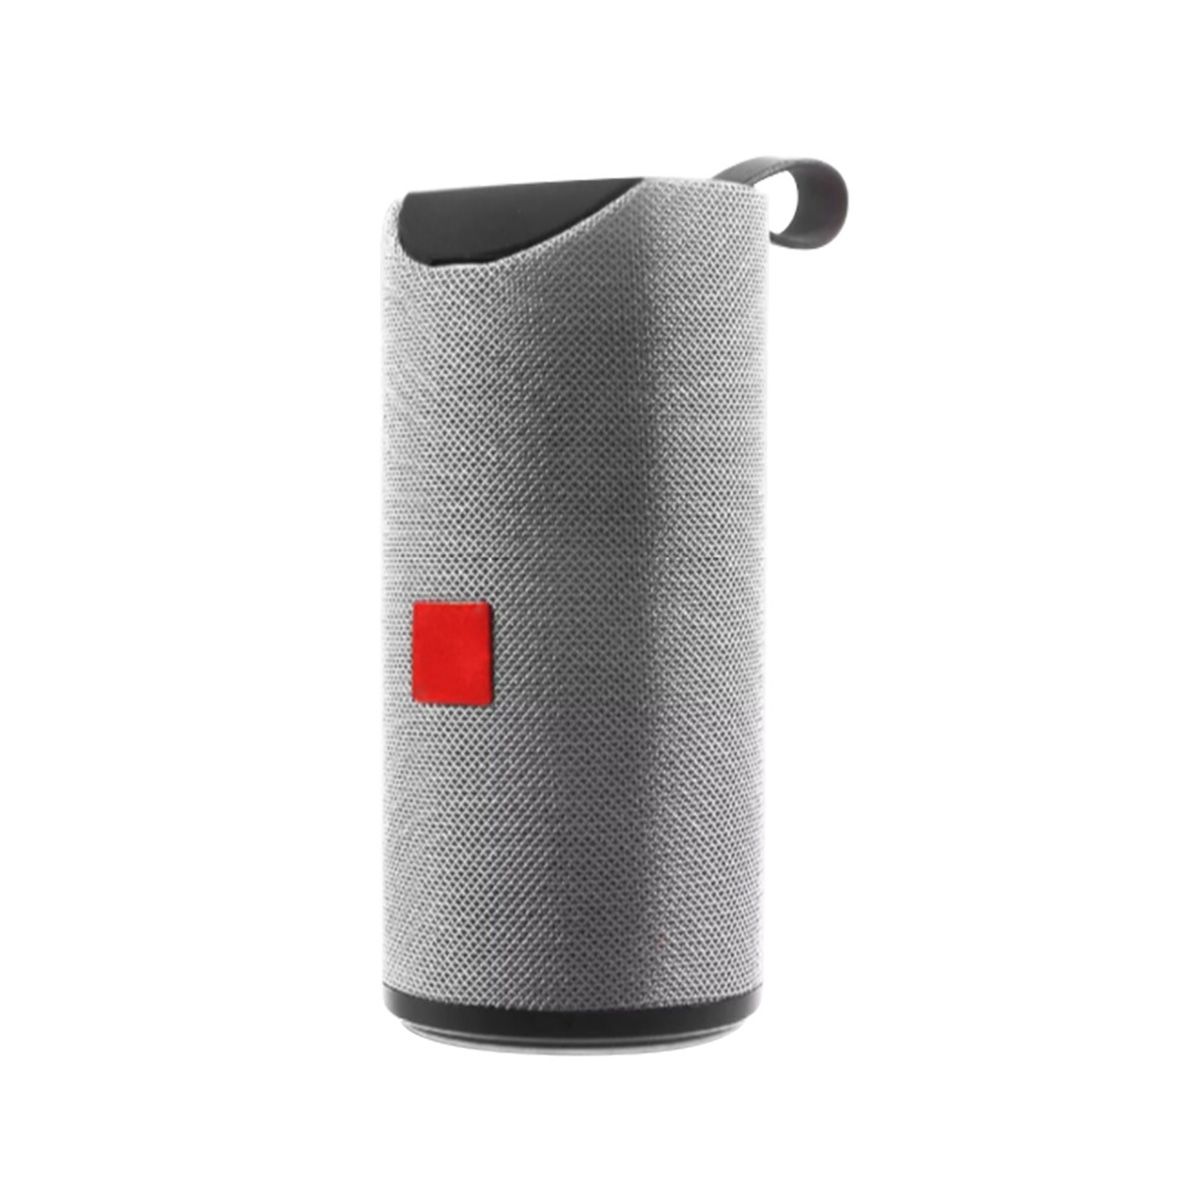 Hot Speed ลำโพงบลูทูธ GT-113 Portable Bluetooth Speaker